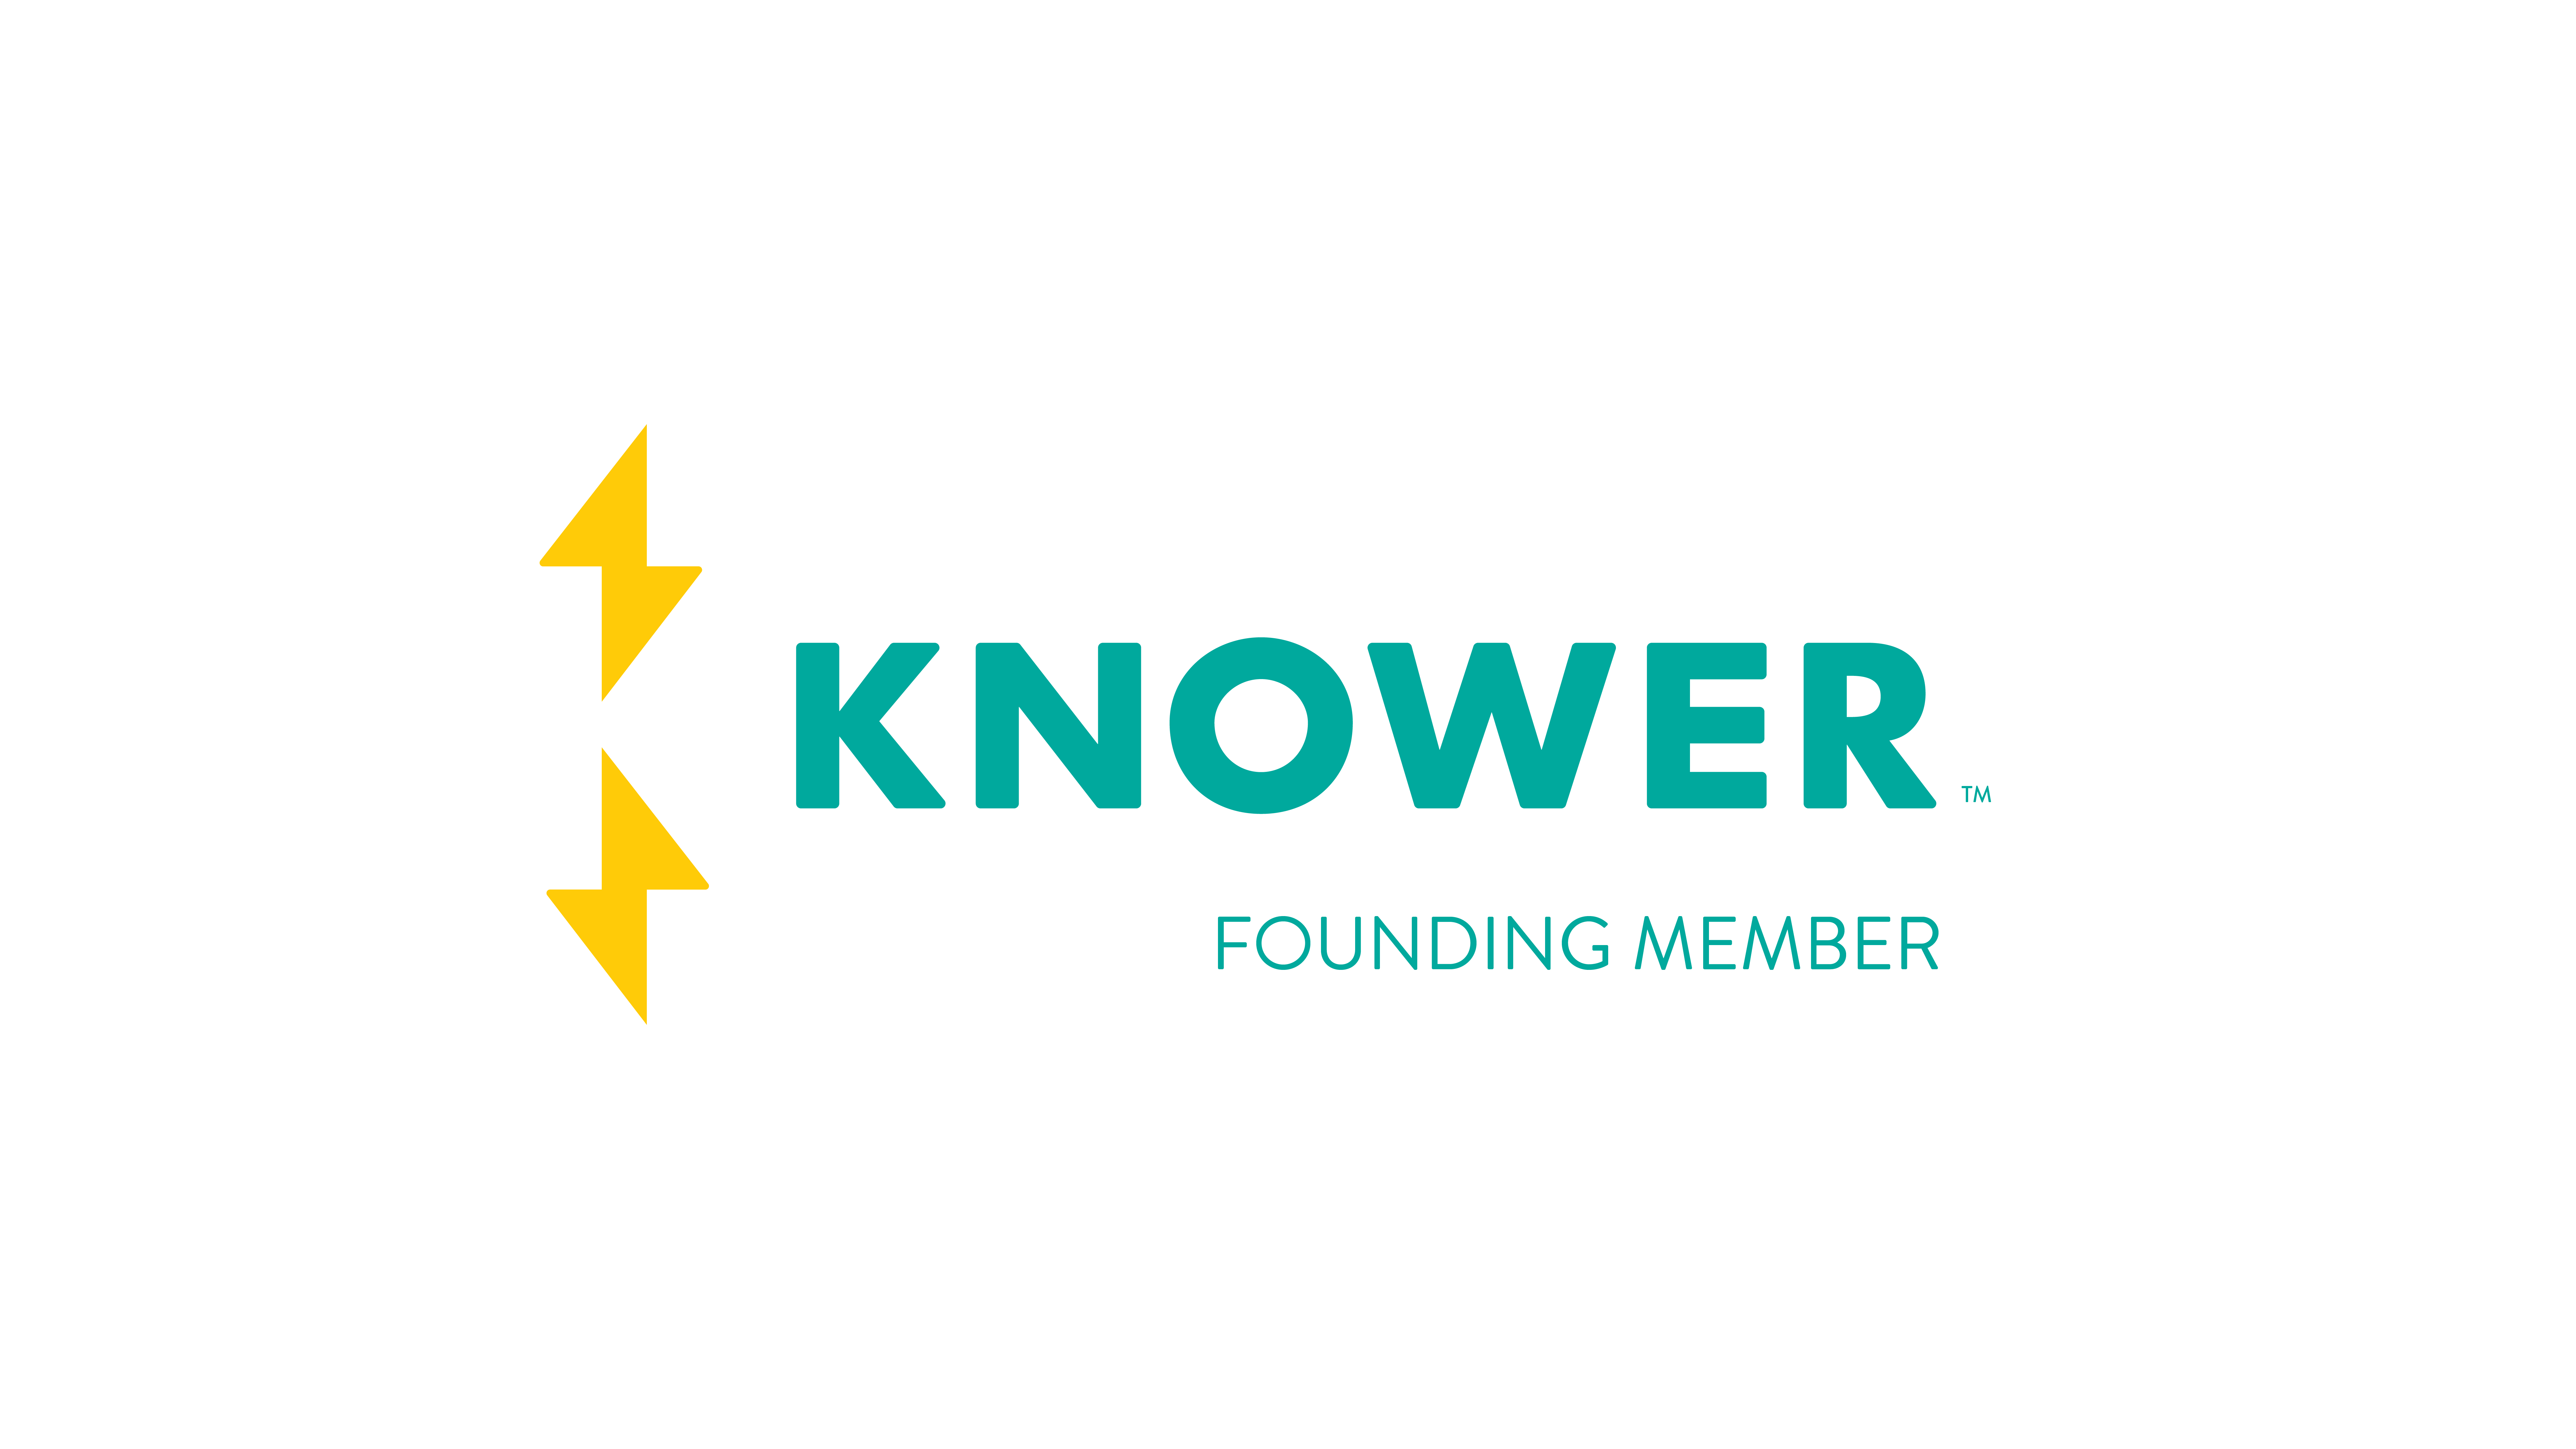 Knower Network Founding Member